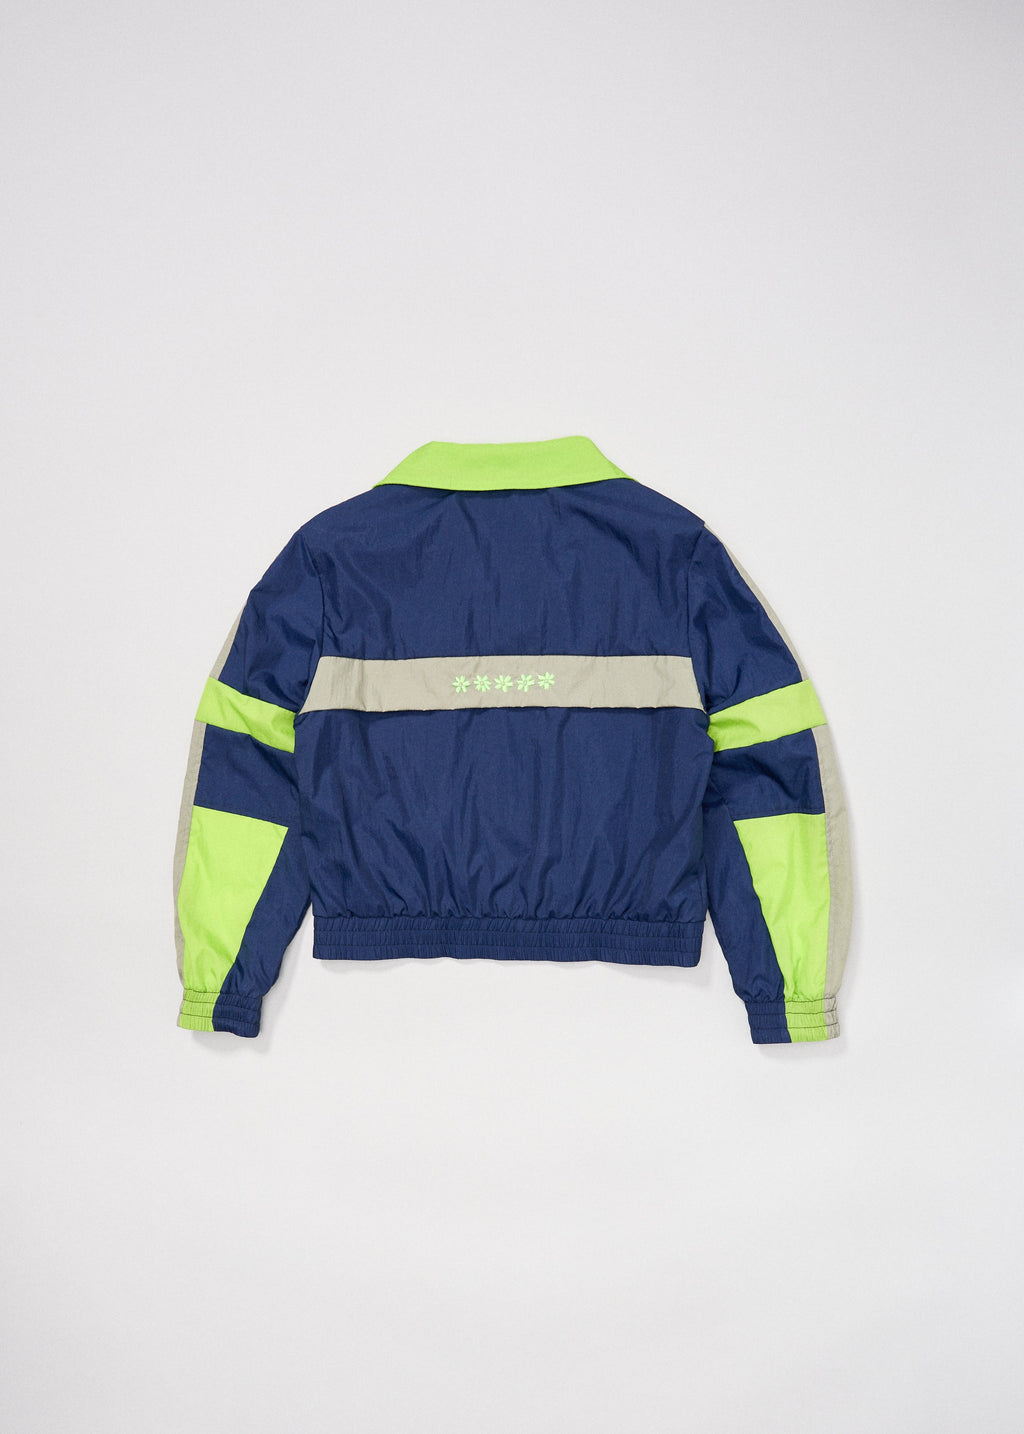 PV Sports Jacket